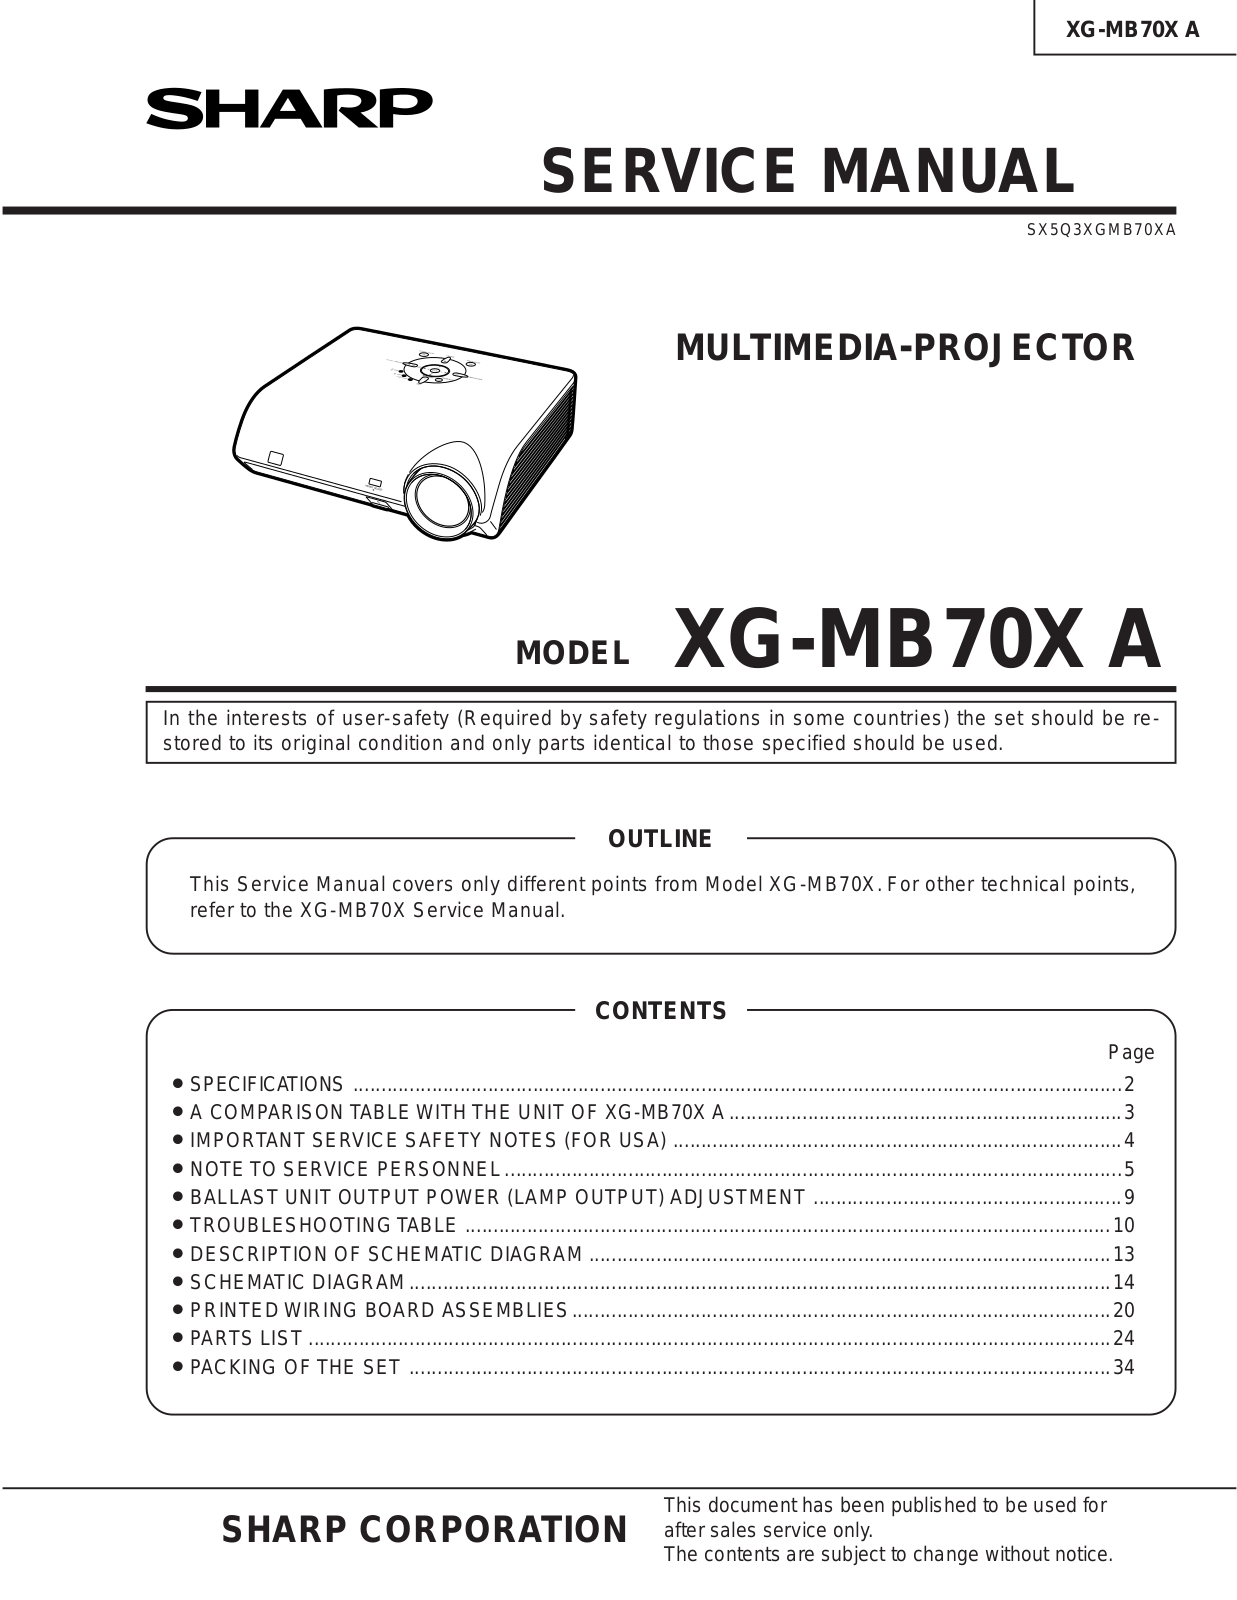 Sharp XGMB70XA Service Manual